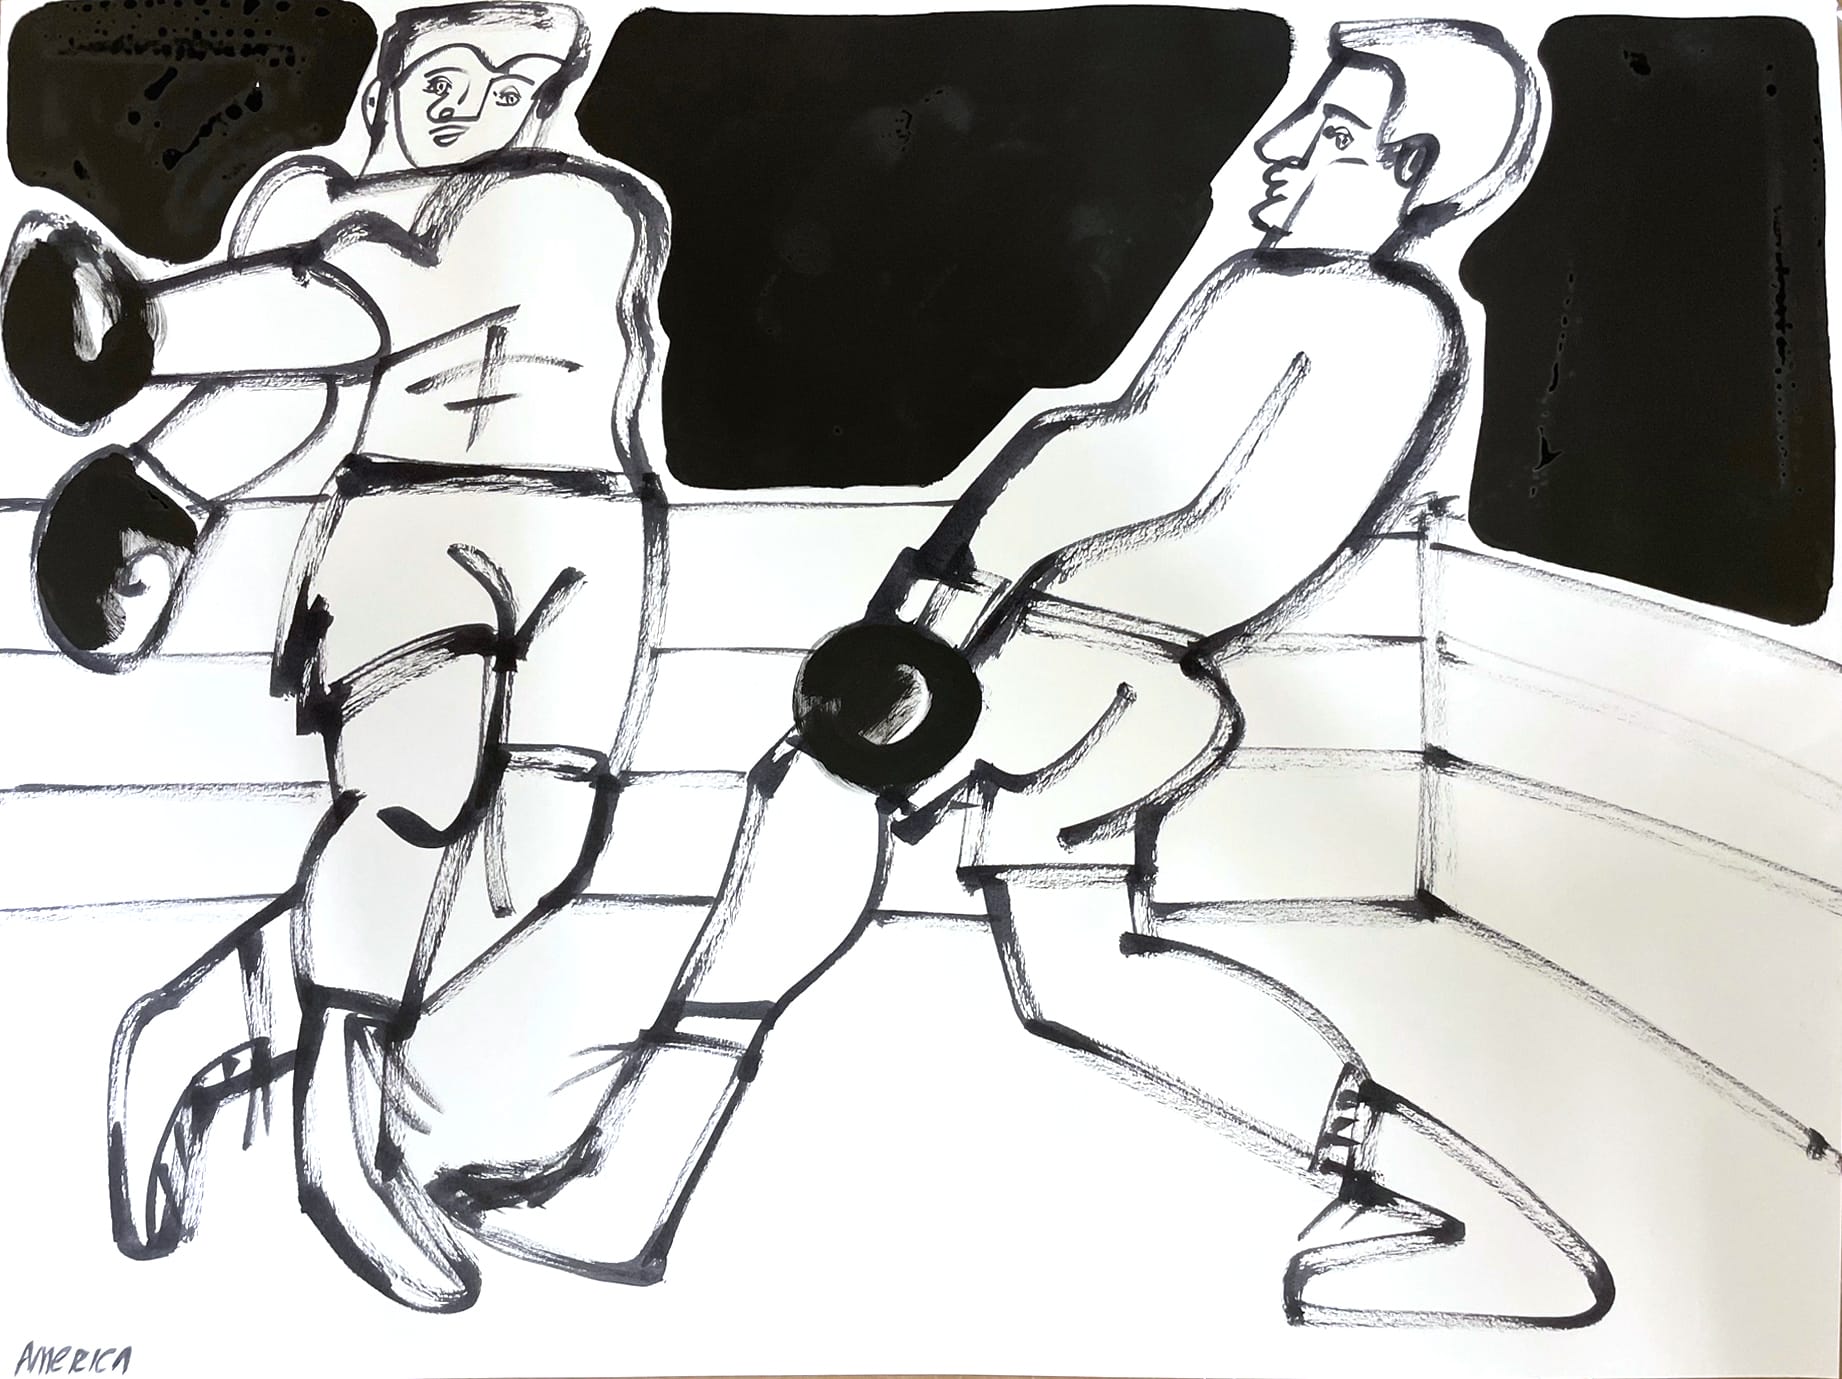 boxer ii, america martin, ink on paper, black and white figurative